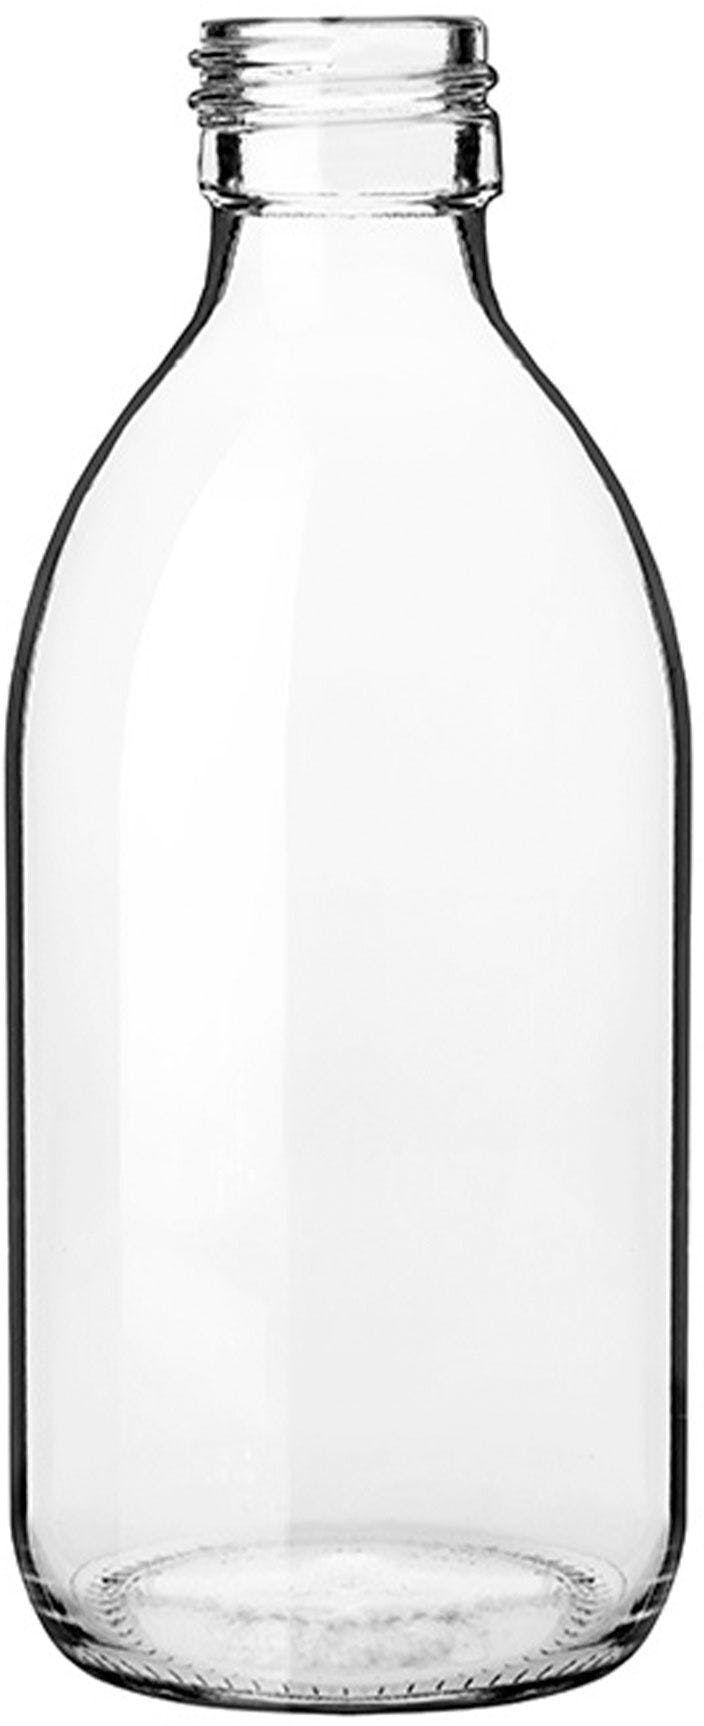 Flask TONDO 250 (776250)P28